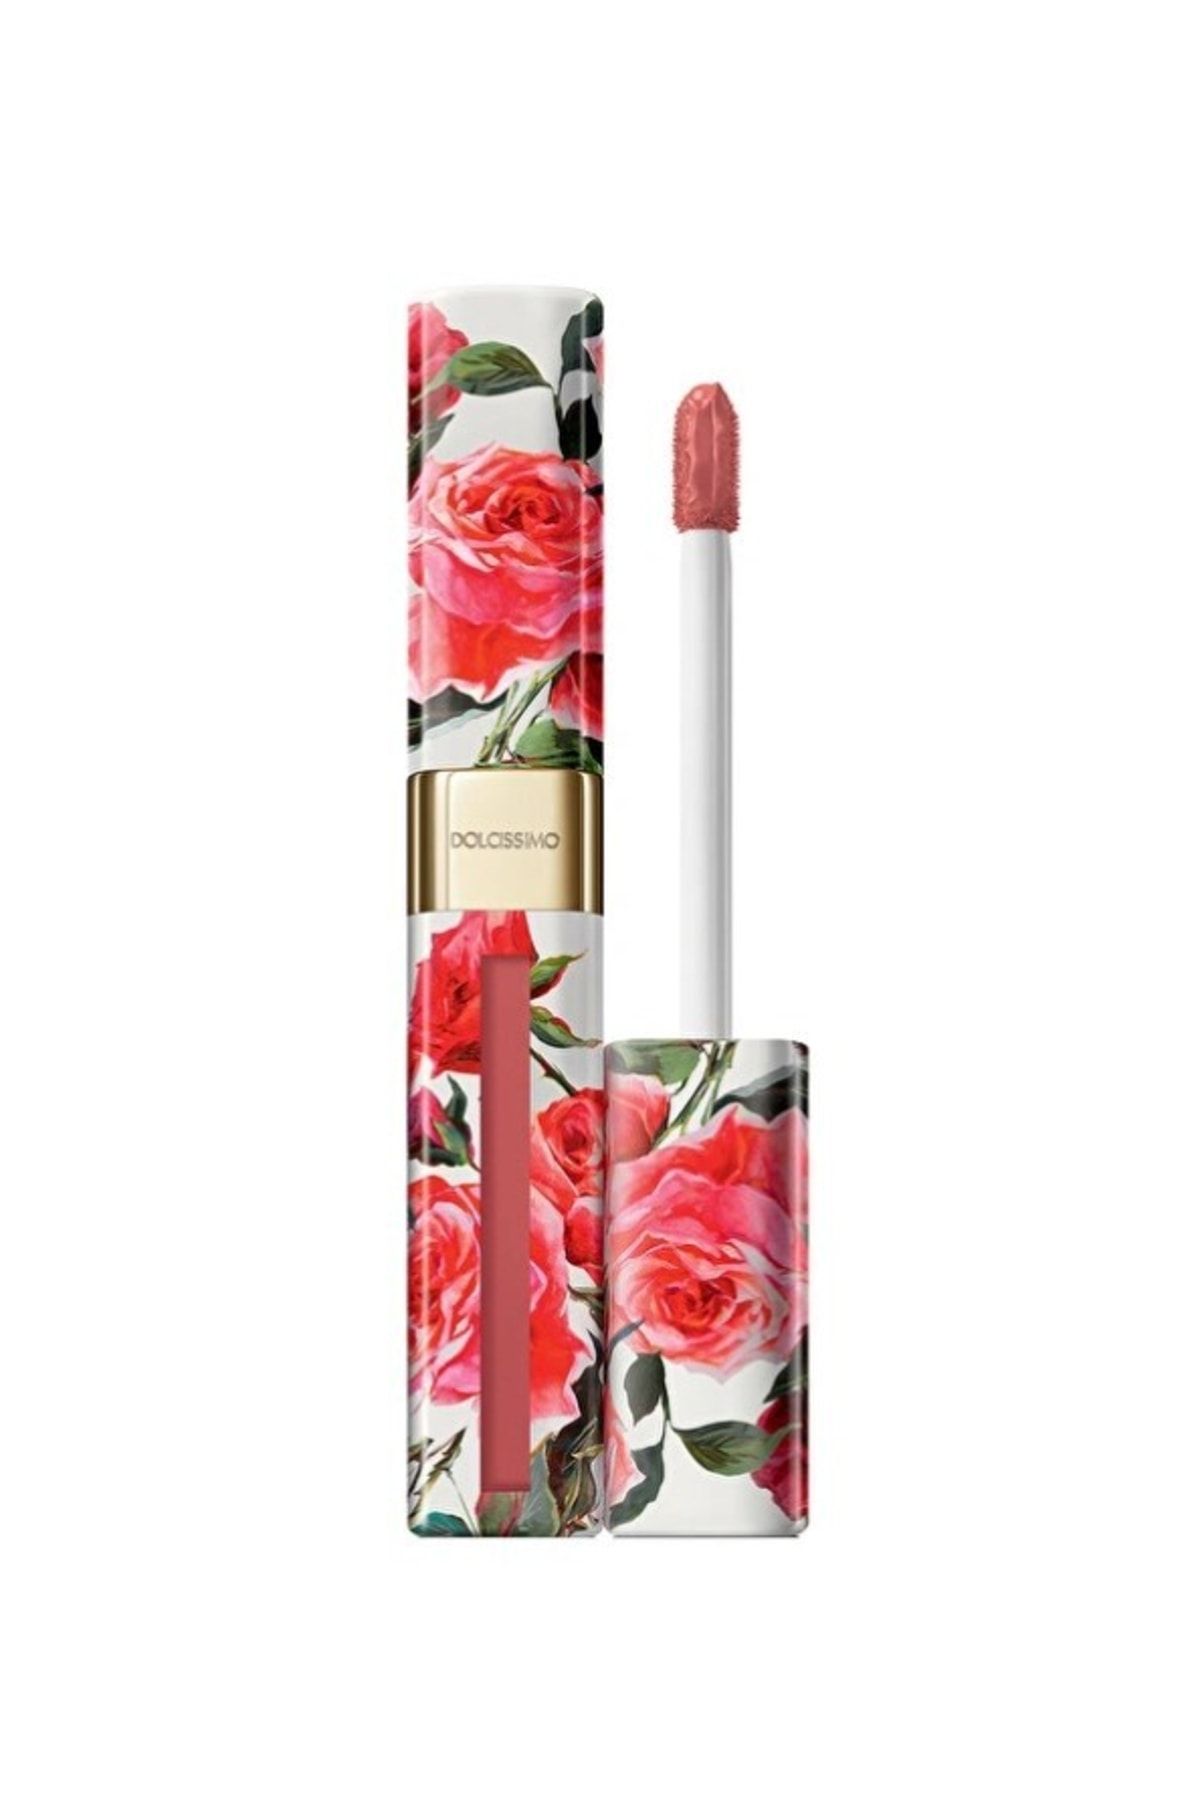 Dolce & Gabbana Beauty Dolcıssımo Matte Lıquıd Lıpcolour 3 Rosebud 5ml